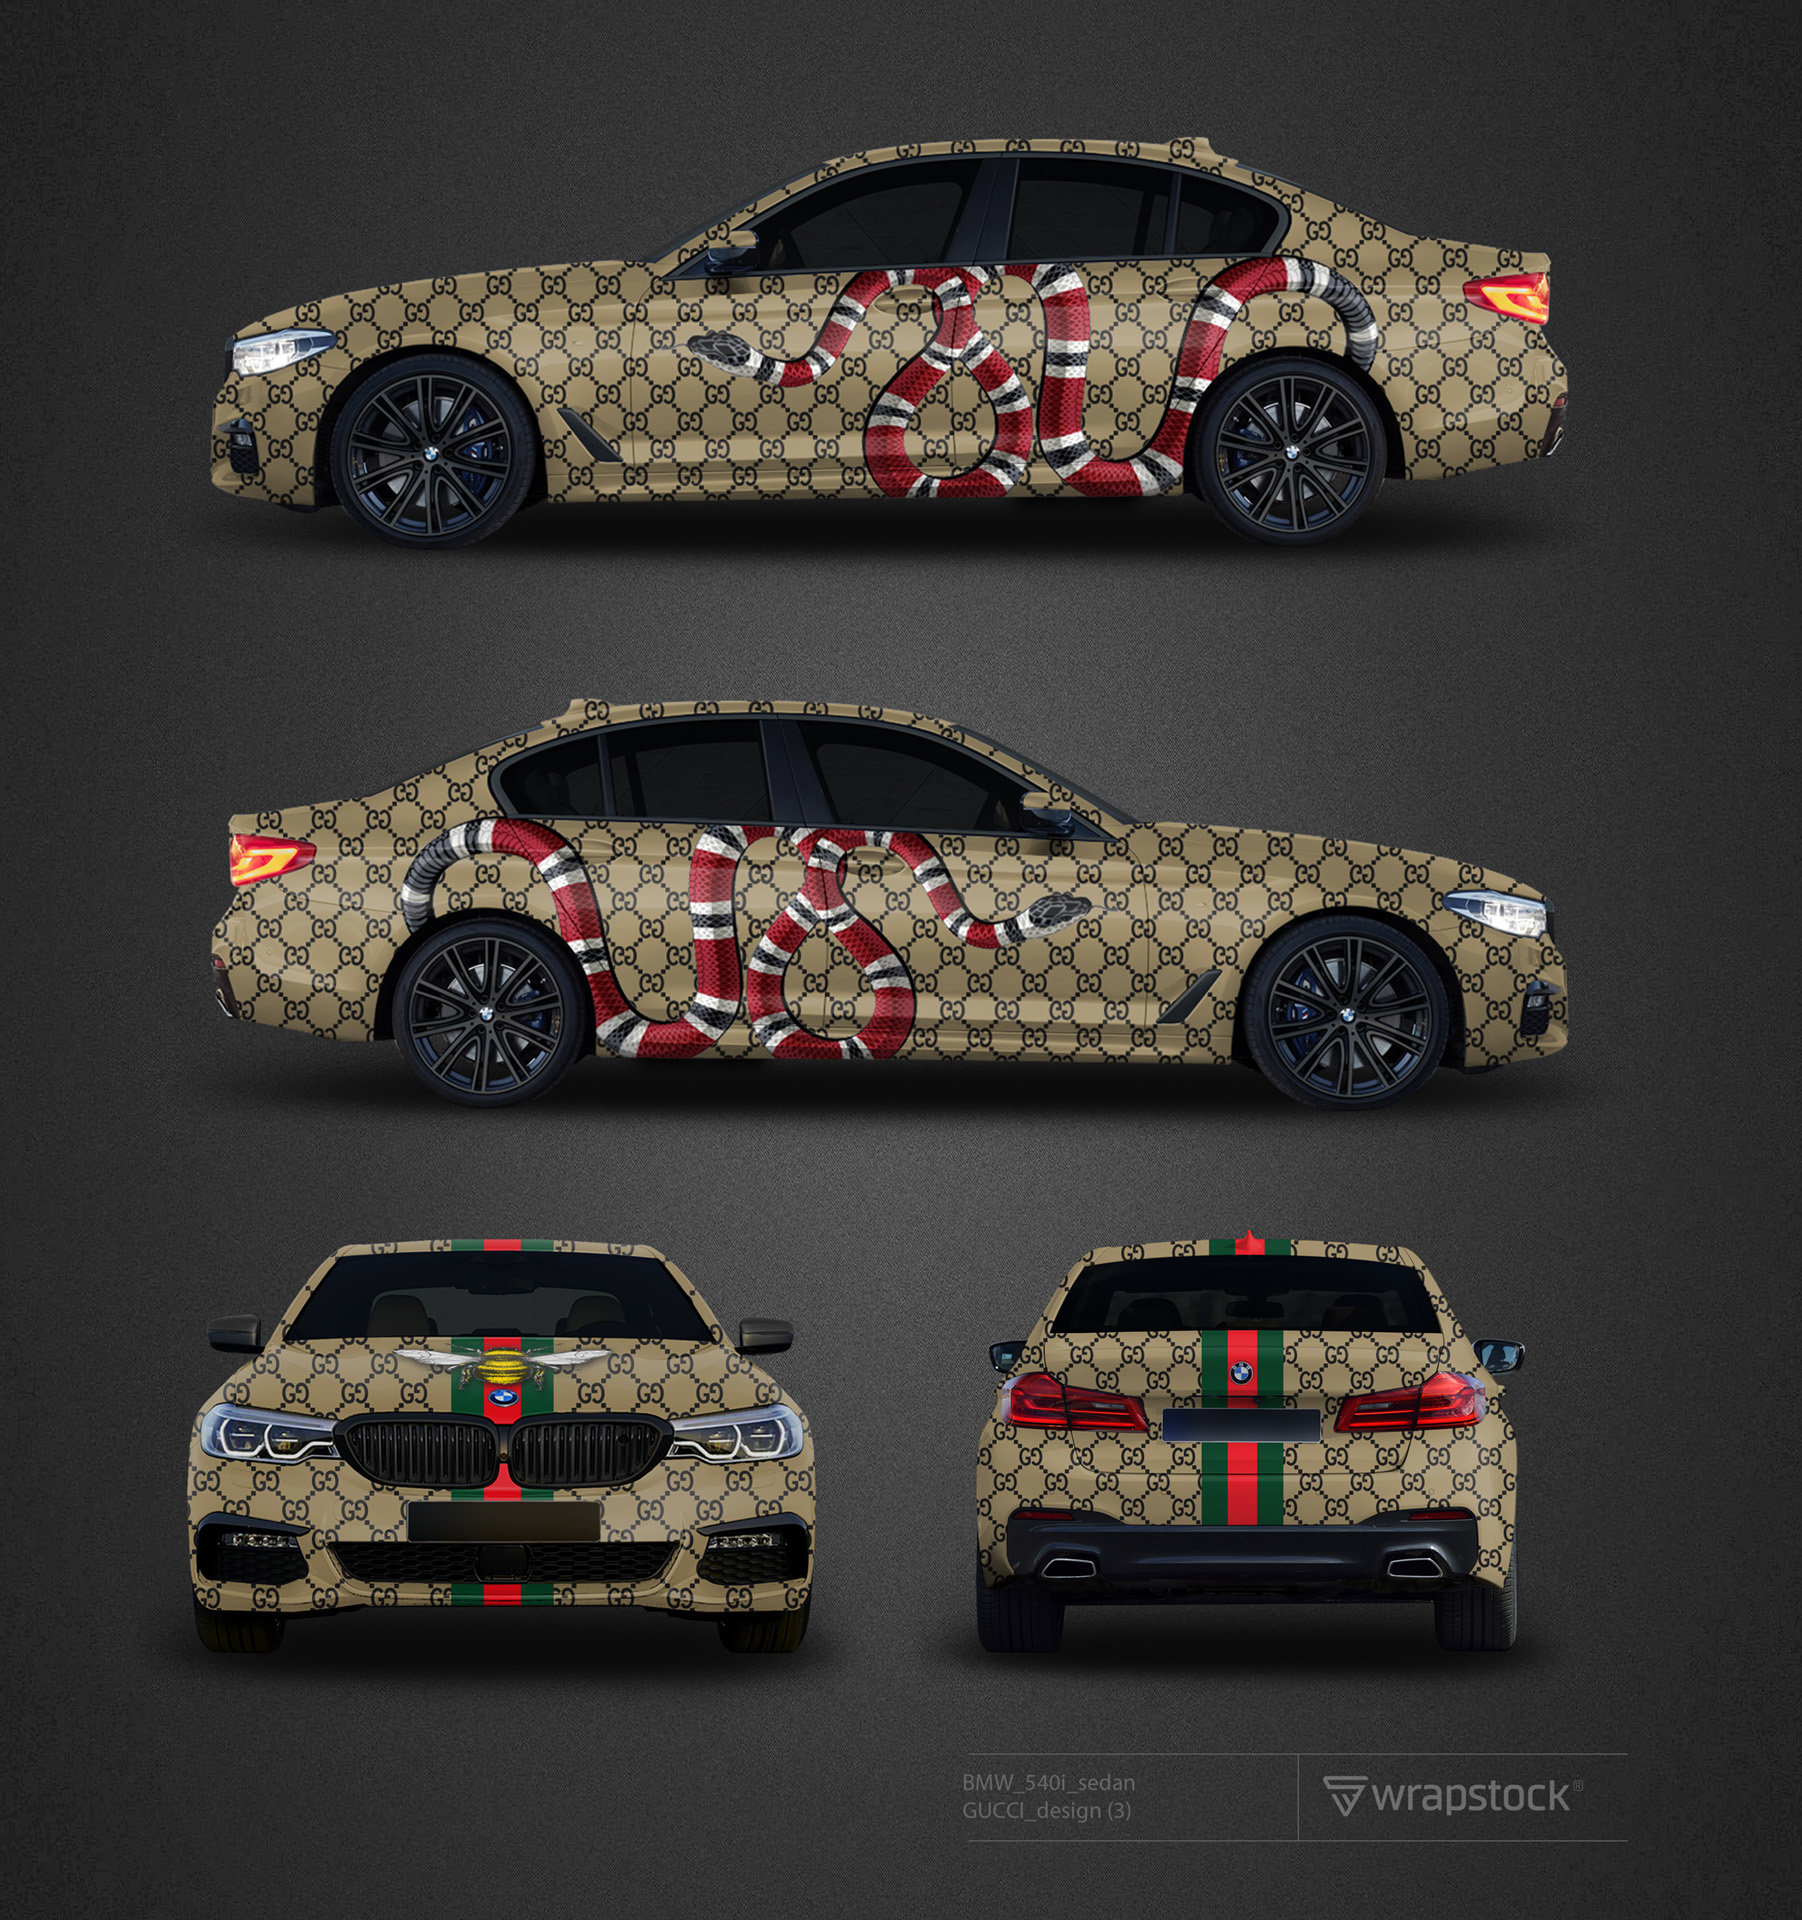 BMW 540i - Gucci Design